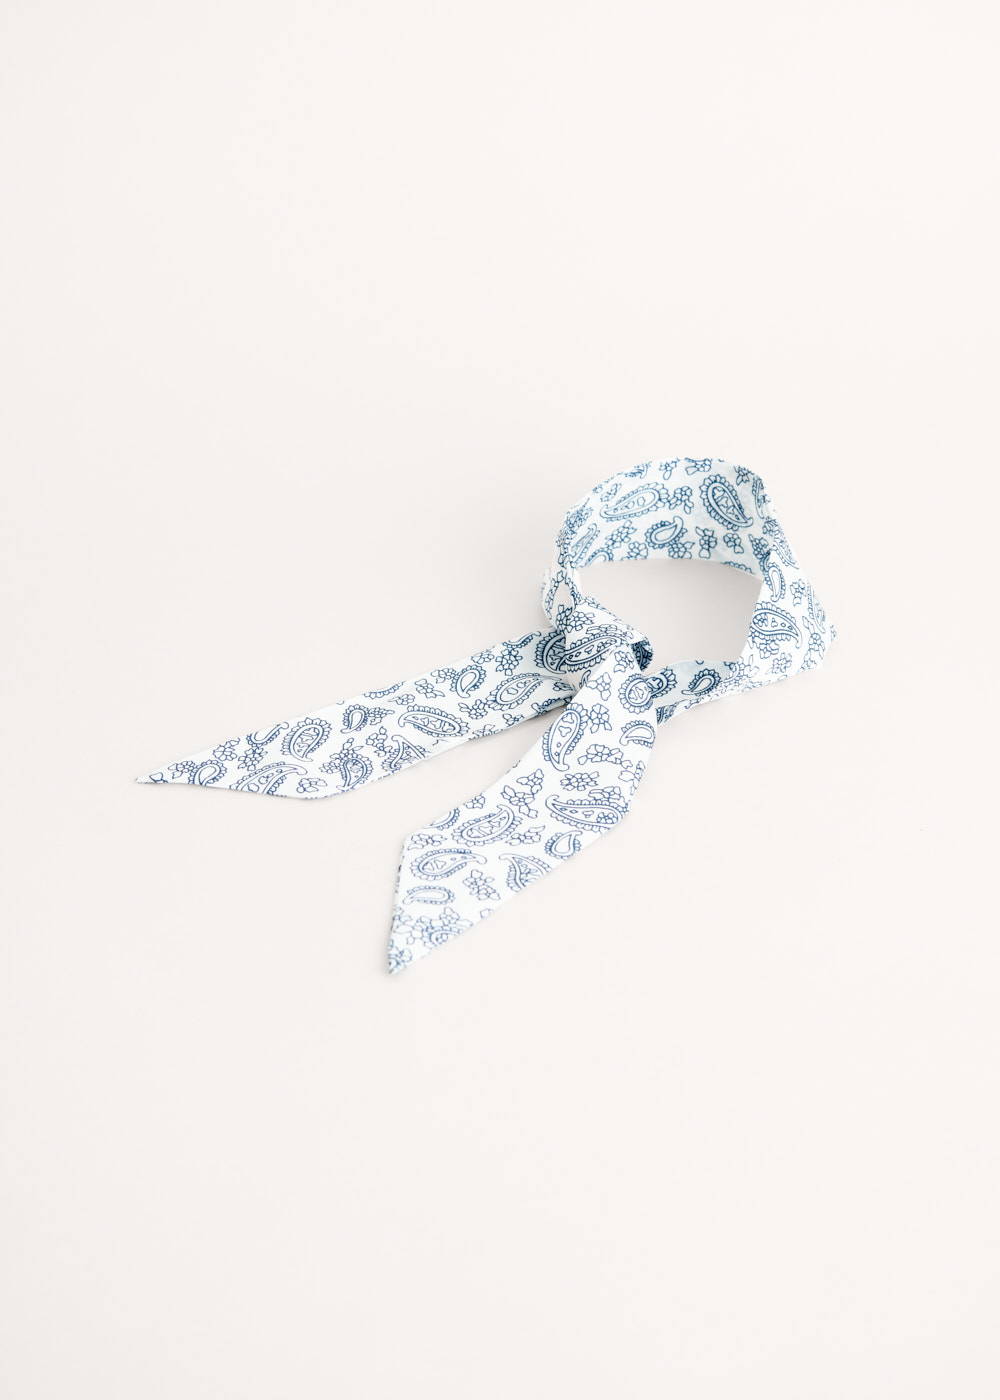 A white satin neckercheif with blue paisley pattern